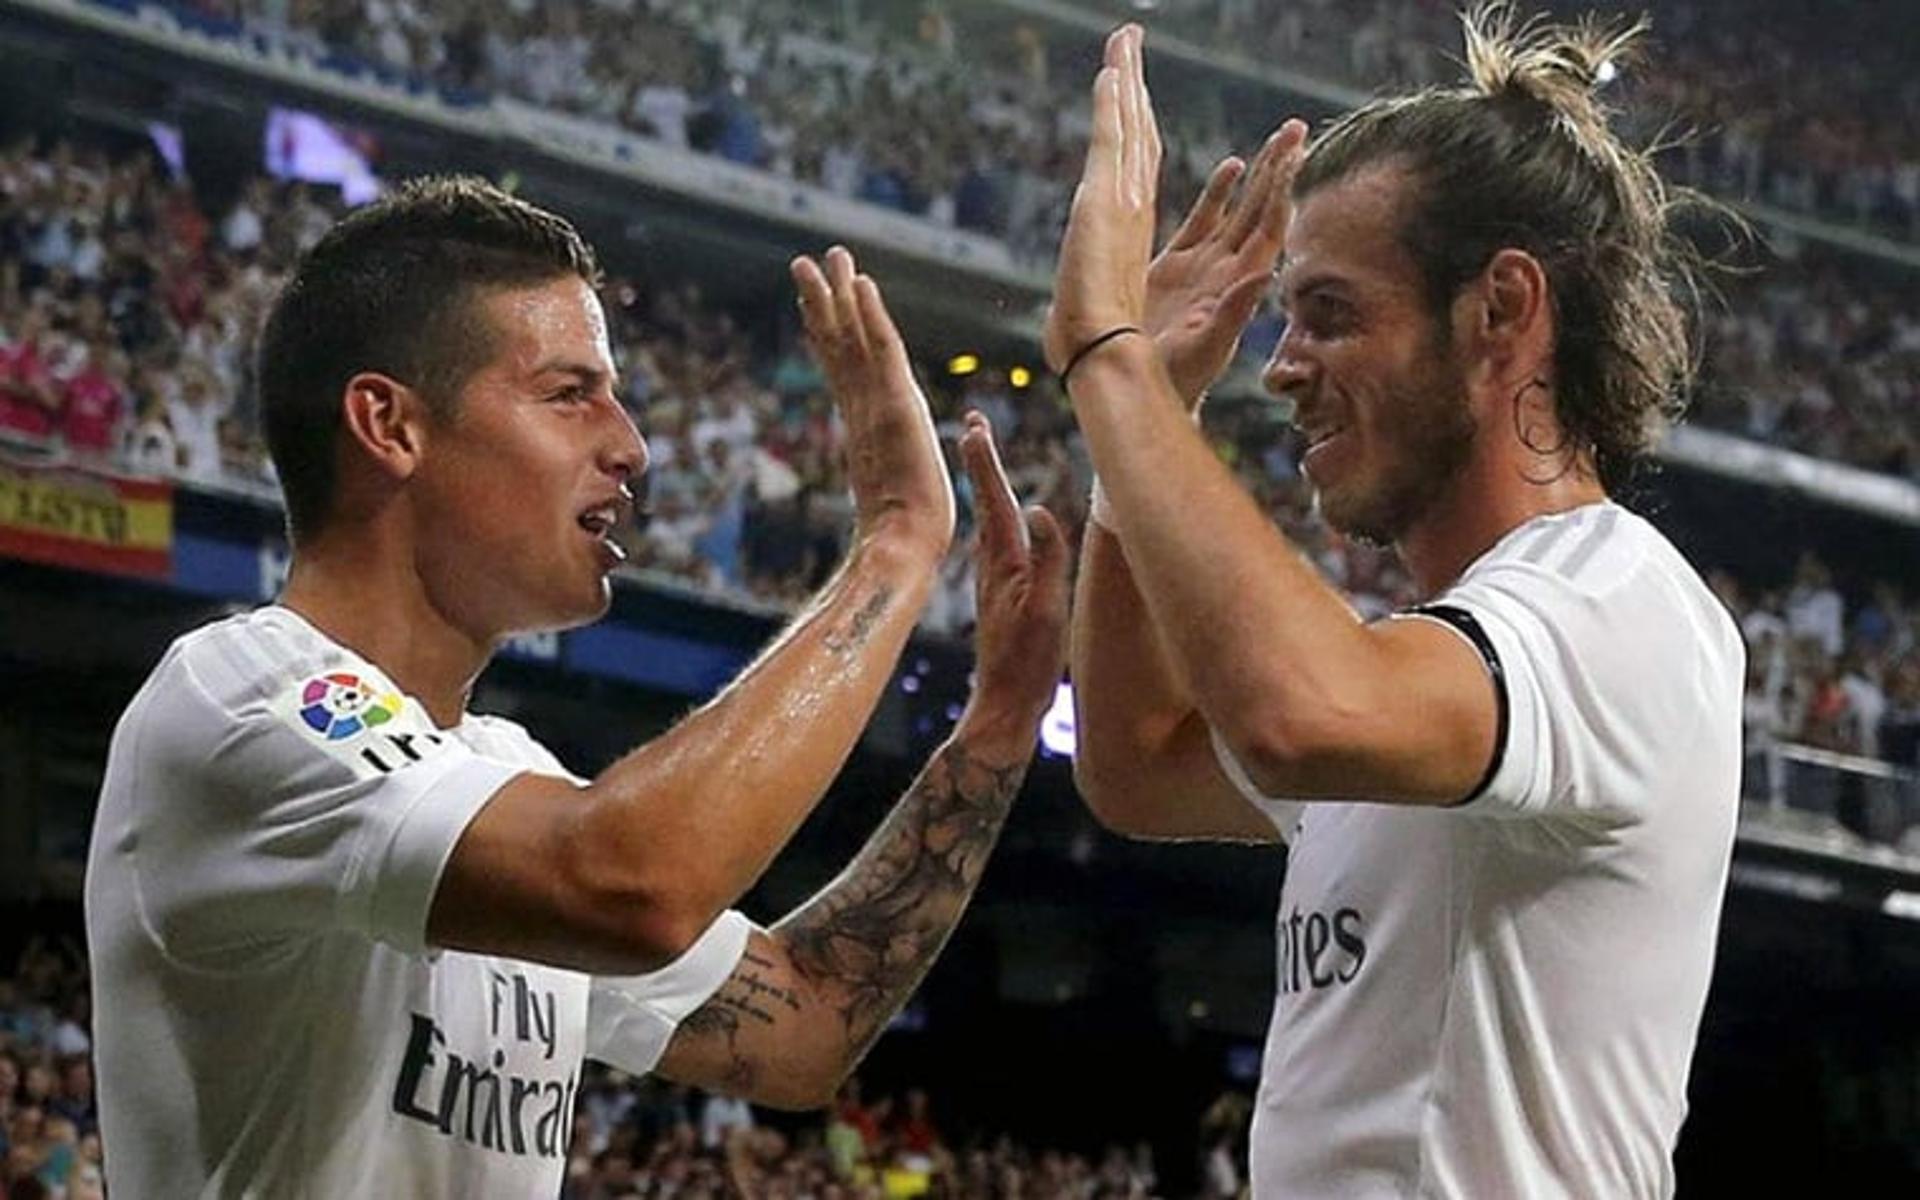 Bale e James Rodriguez - Real Madrid